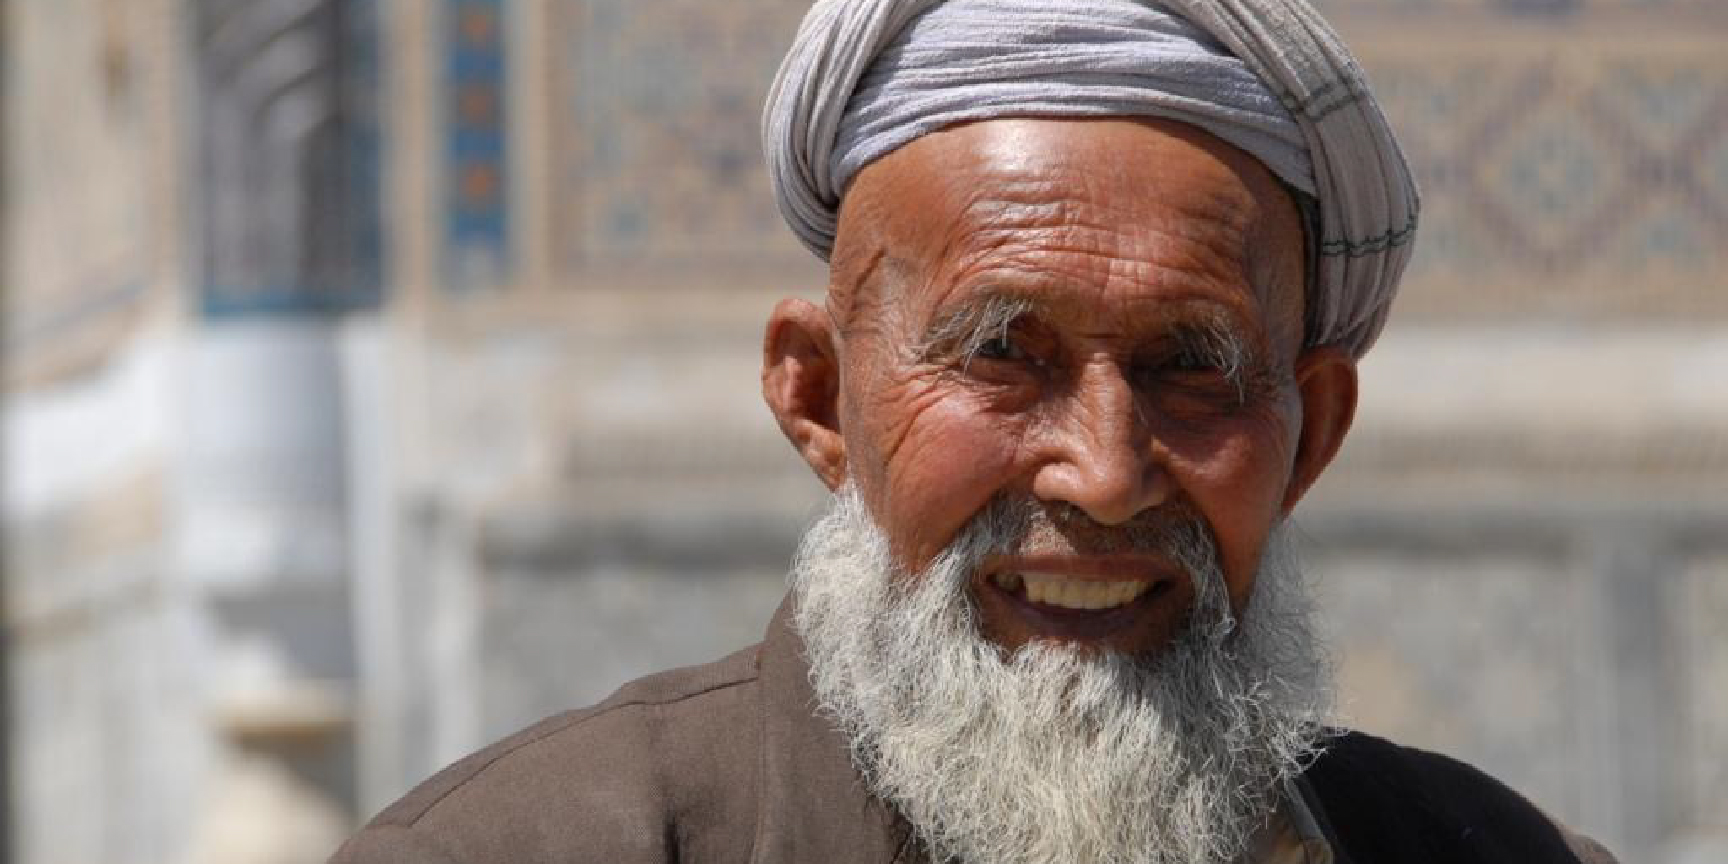 An older Uzbek man with a white beard wearing a turban.